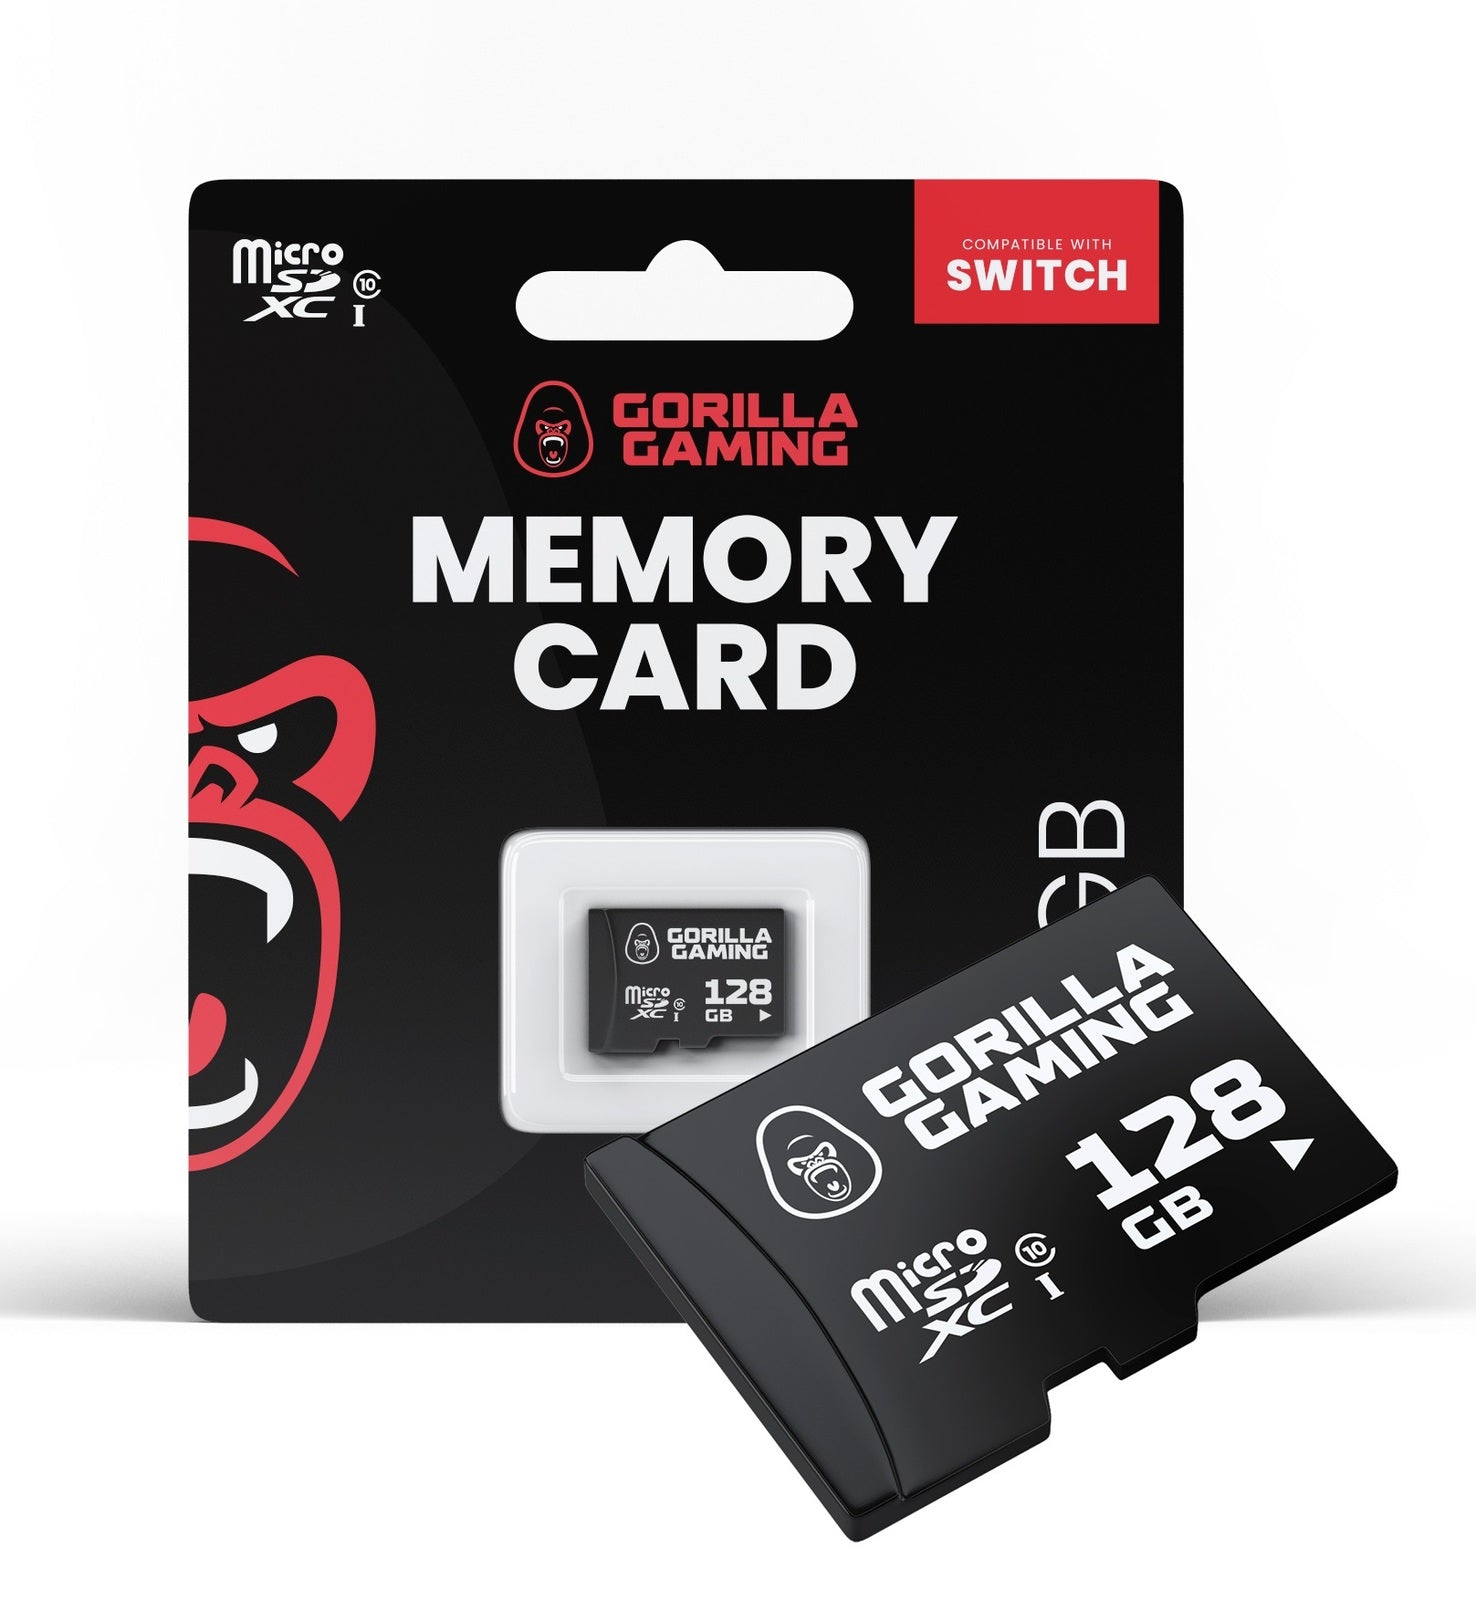 Gorilla Gaming Switch 128GB Memory Card - Nintendo Switch